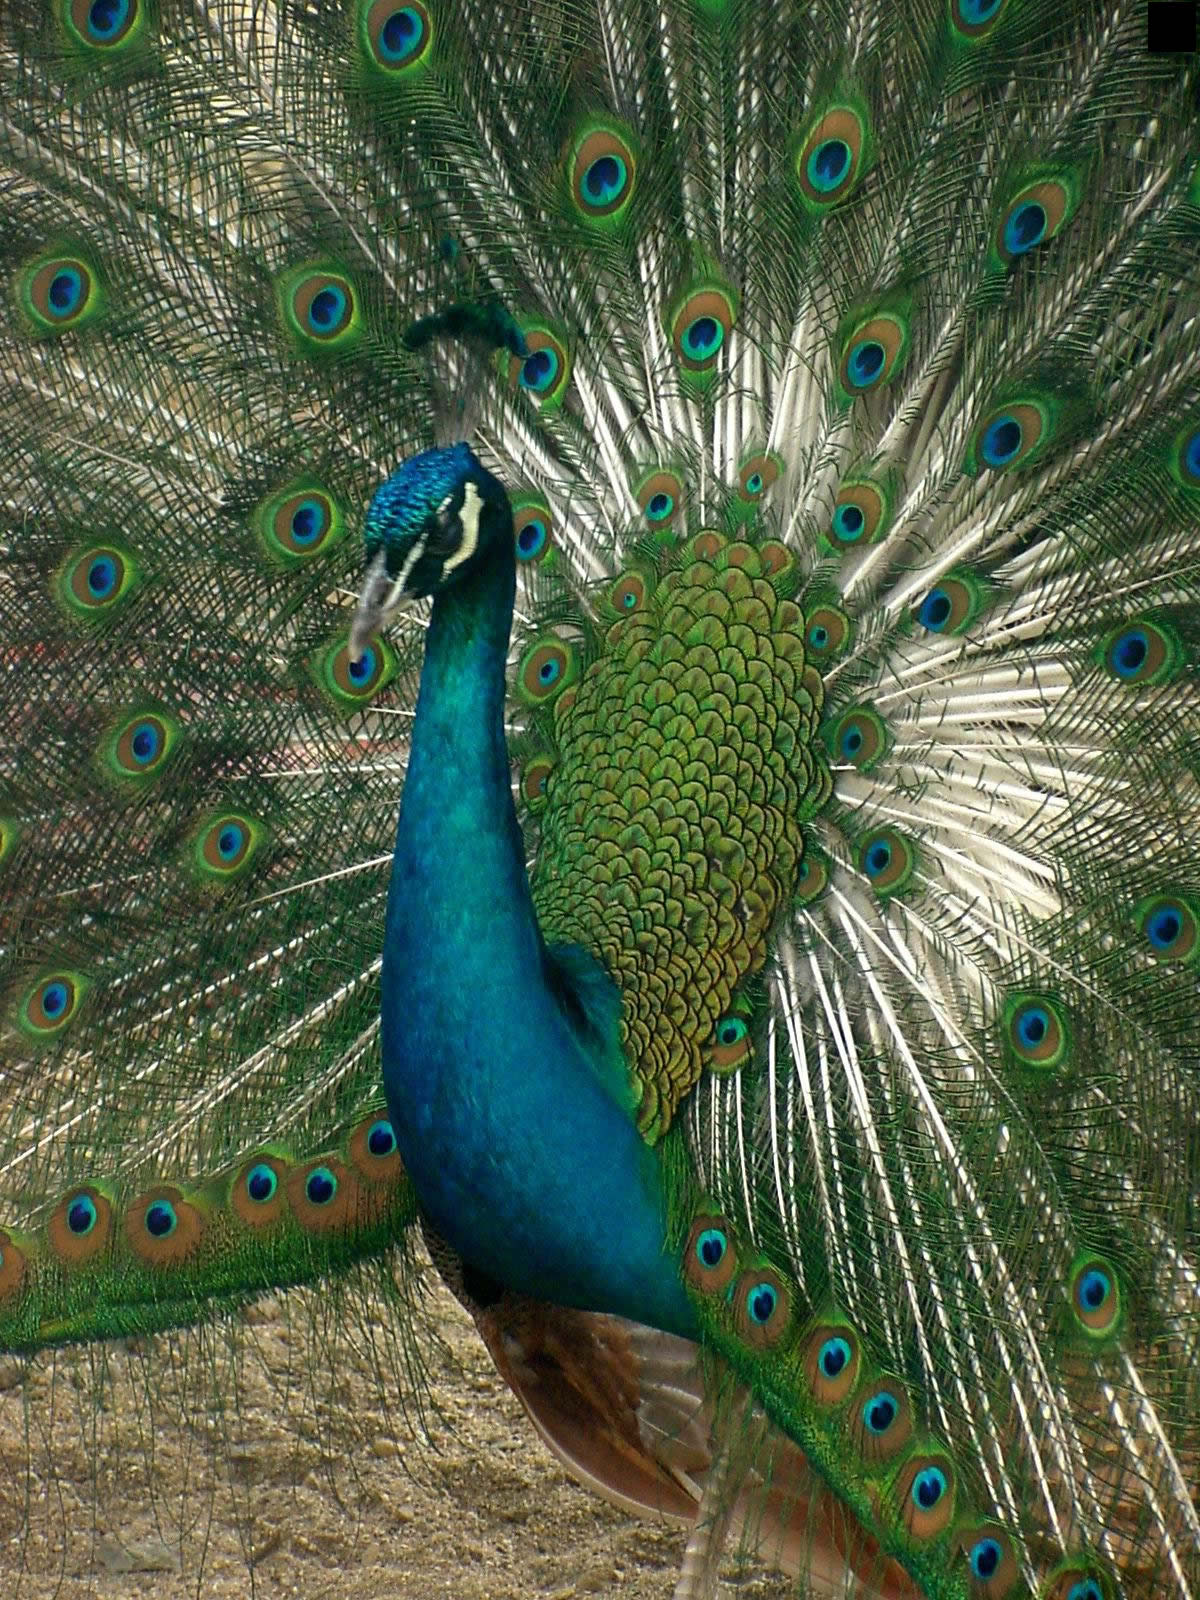 Peacock Quotes Poems. QuotesGram